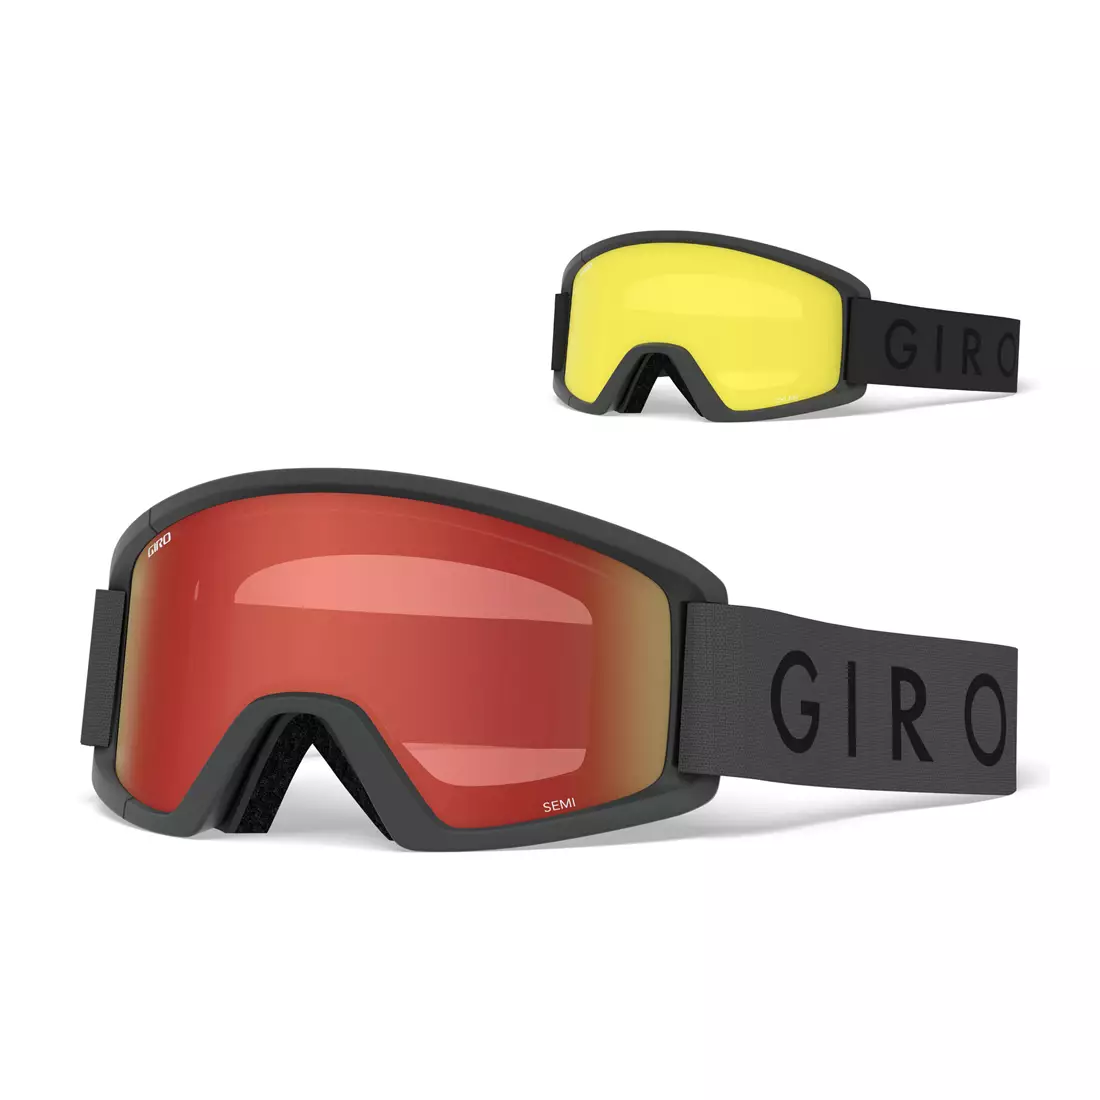 Lyžařské / snowboardové brýle GIRO SEMI GREY CORE GR-7102611